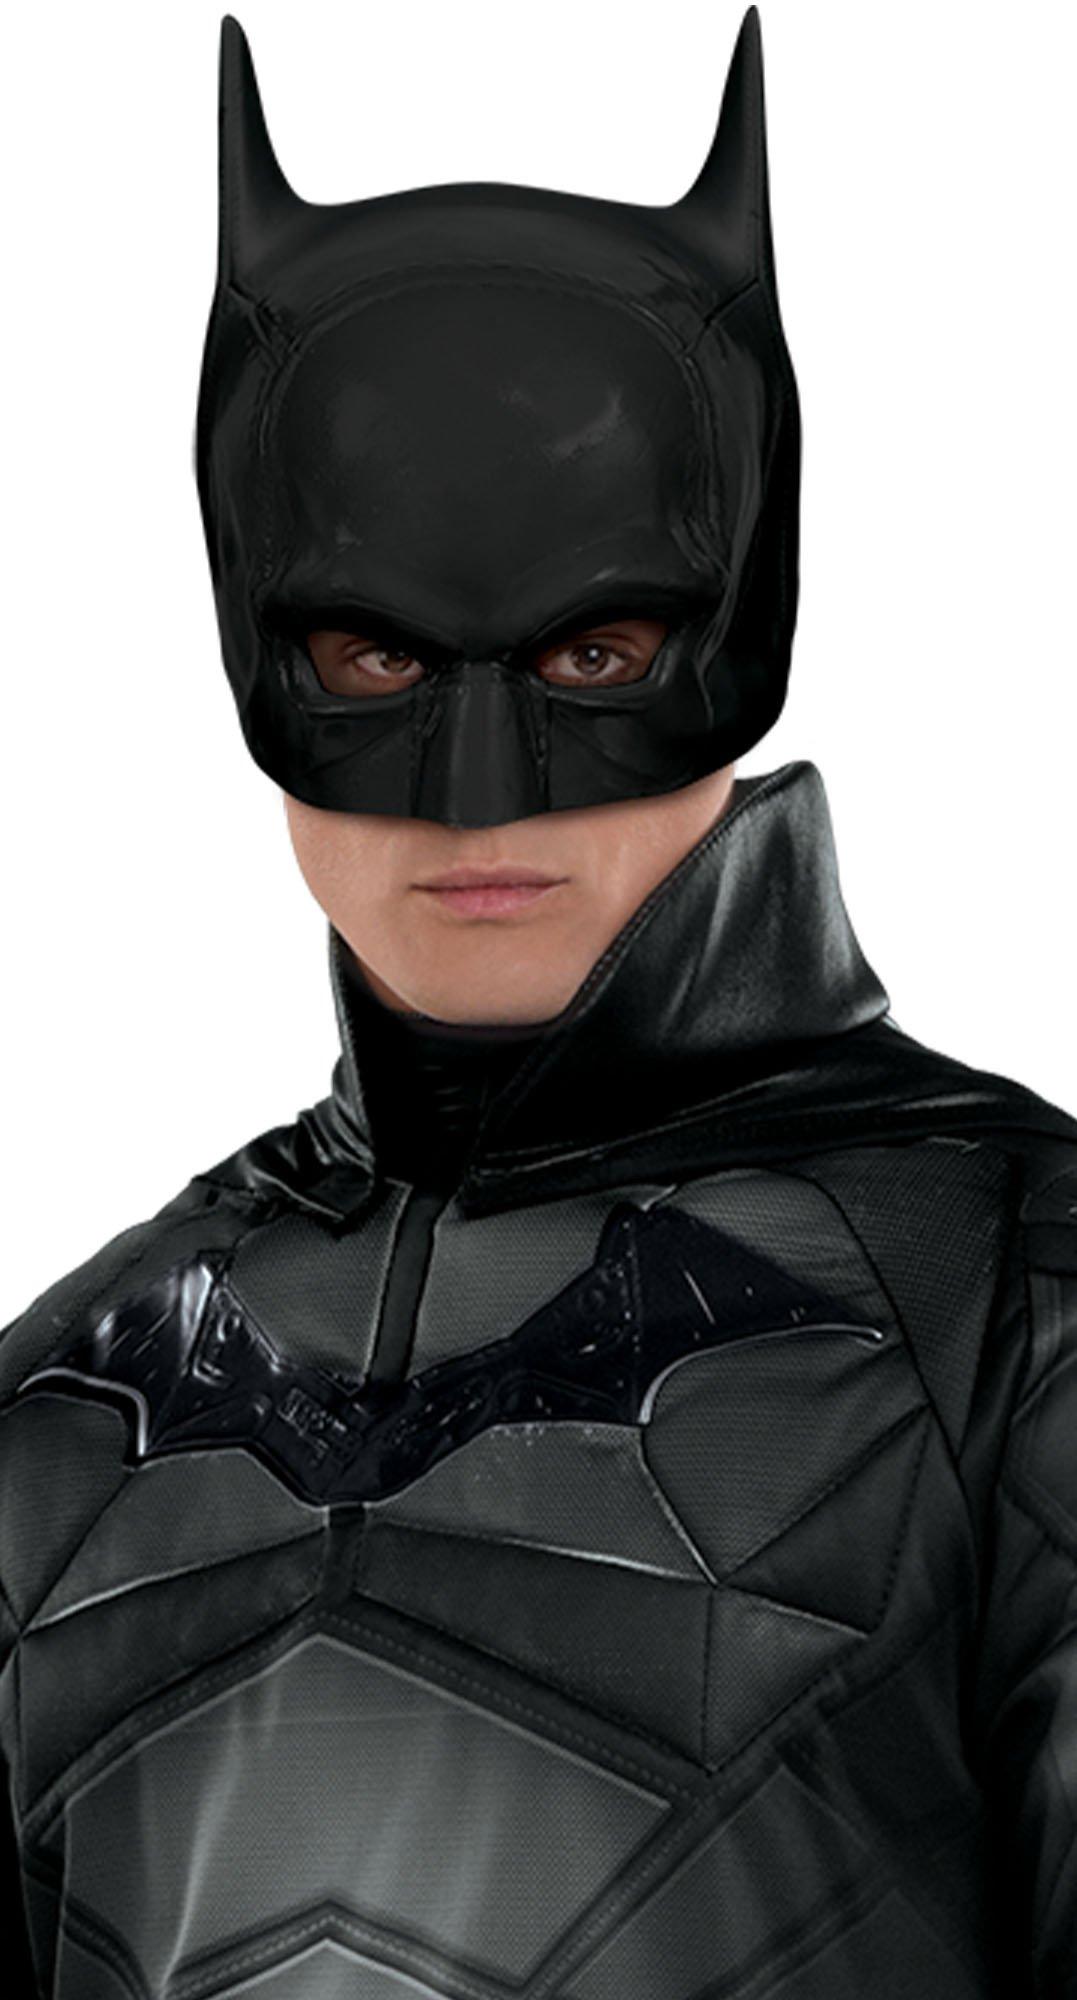 Adult Batman Costume - The Batman | Party